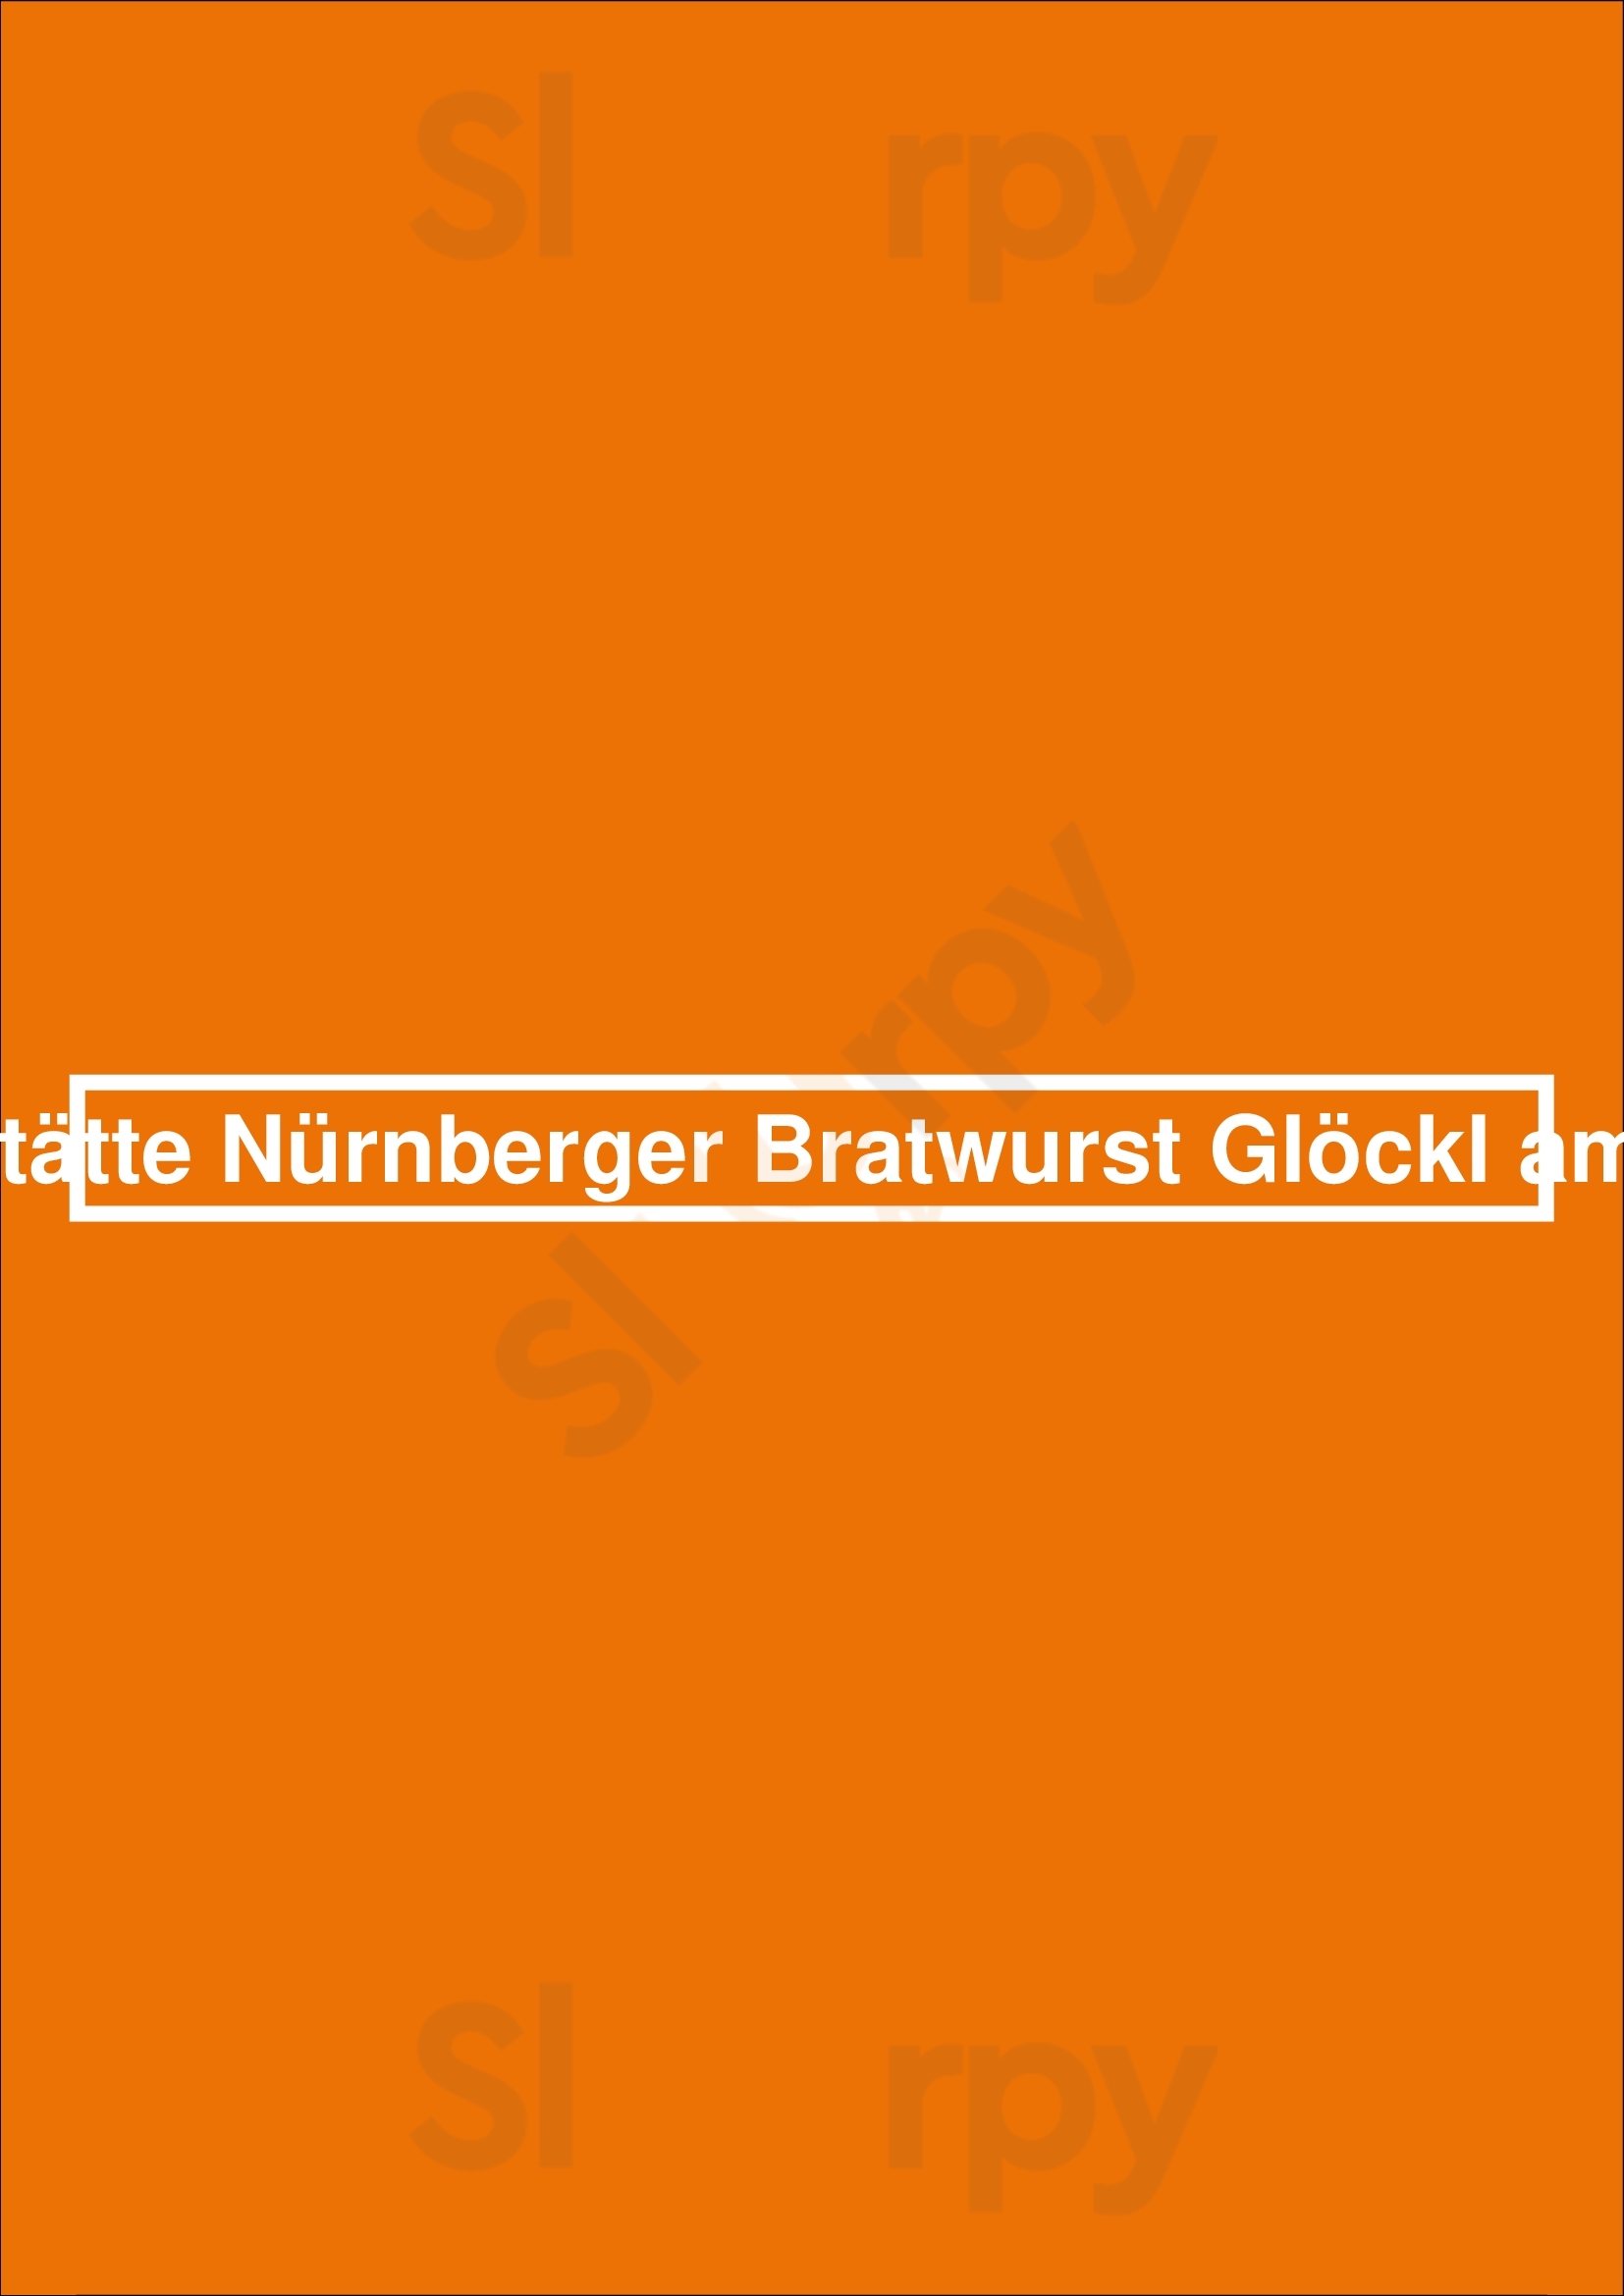 Gaststätte Nürnberger Bratwurst Glöckl Am Dom München Menu - 1